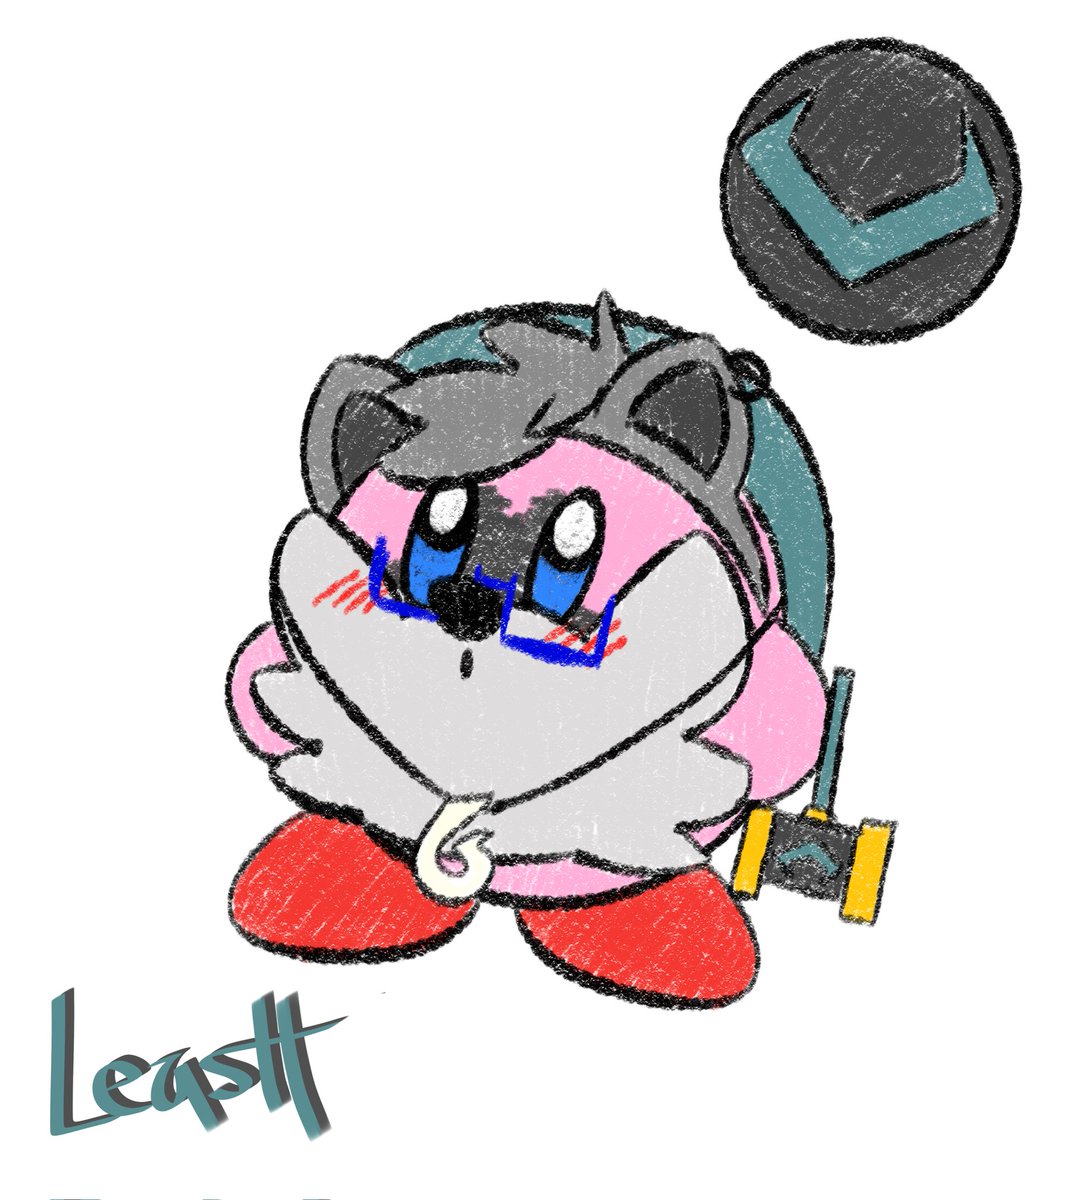 Lil Kirby fanart if he inhales my oc Leash
#kirby #Nintendo #fanart #Leash #oc #hallaboratory #wolf #gray #pink #art #digitalart